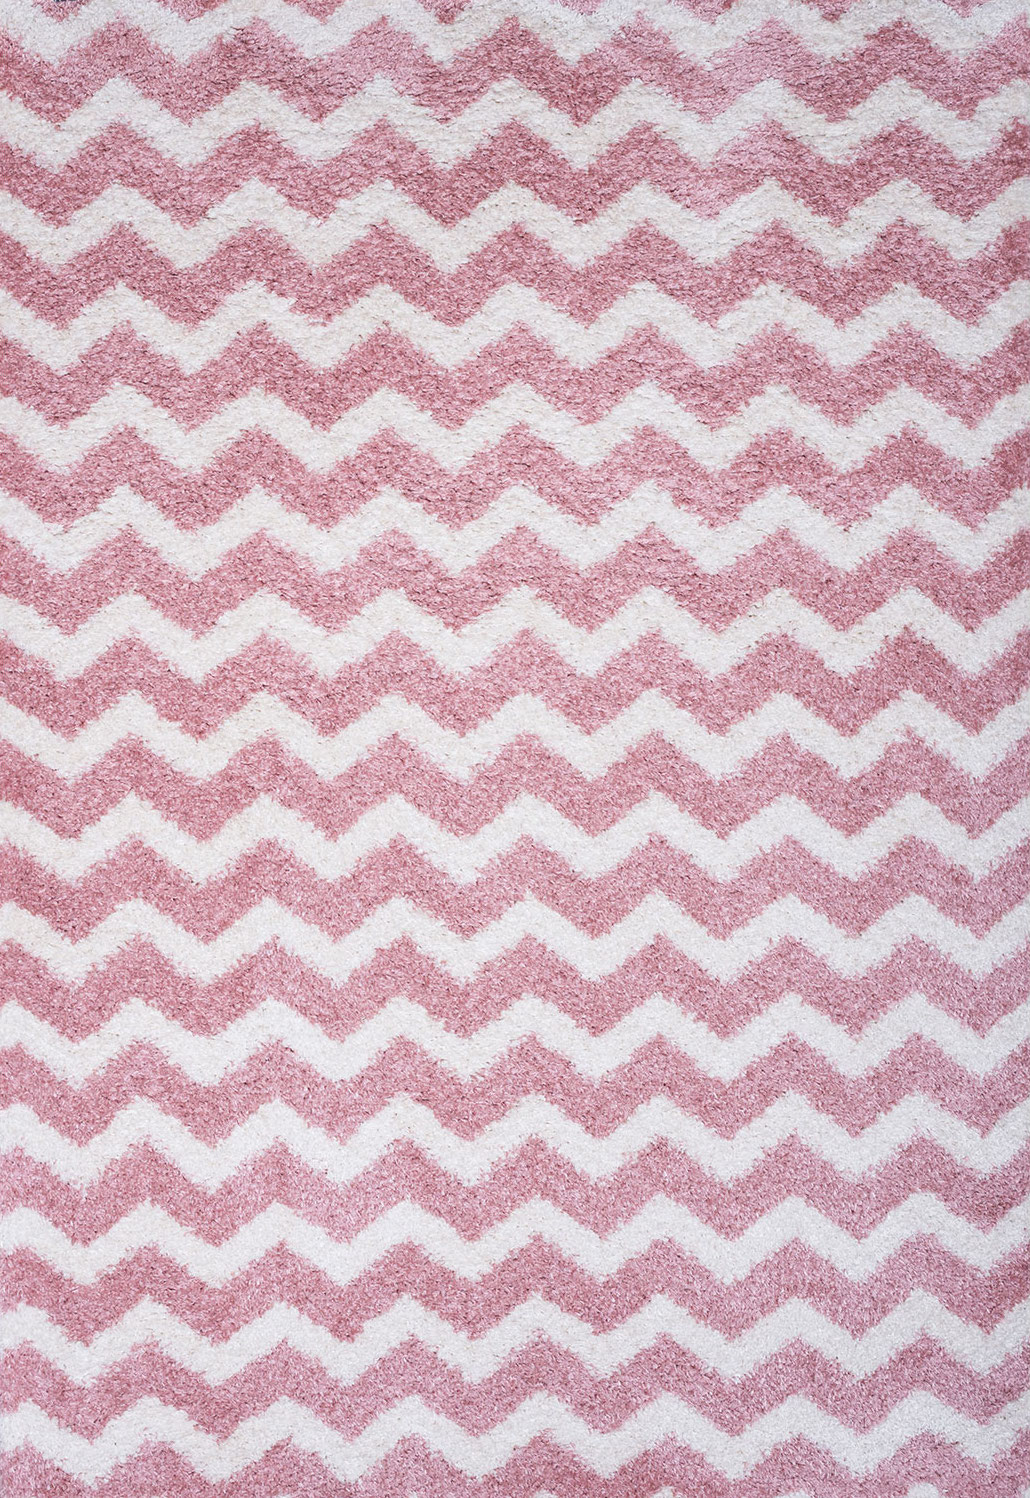 Shaggy παιδικό χαλί Cocoon 8396/55 ροζ με ζικ ζακ ρίγες - 1,30x1,90 Colore Colori